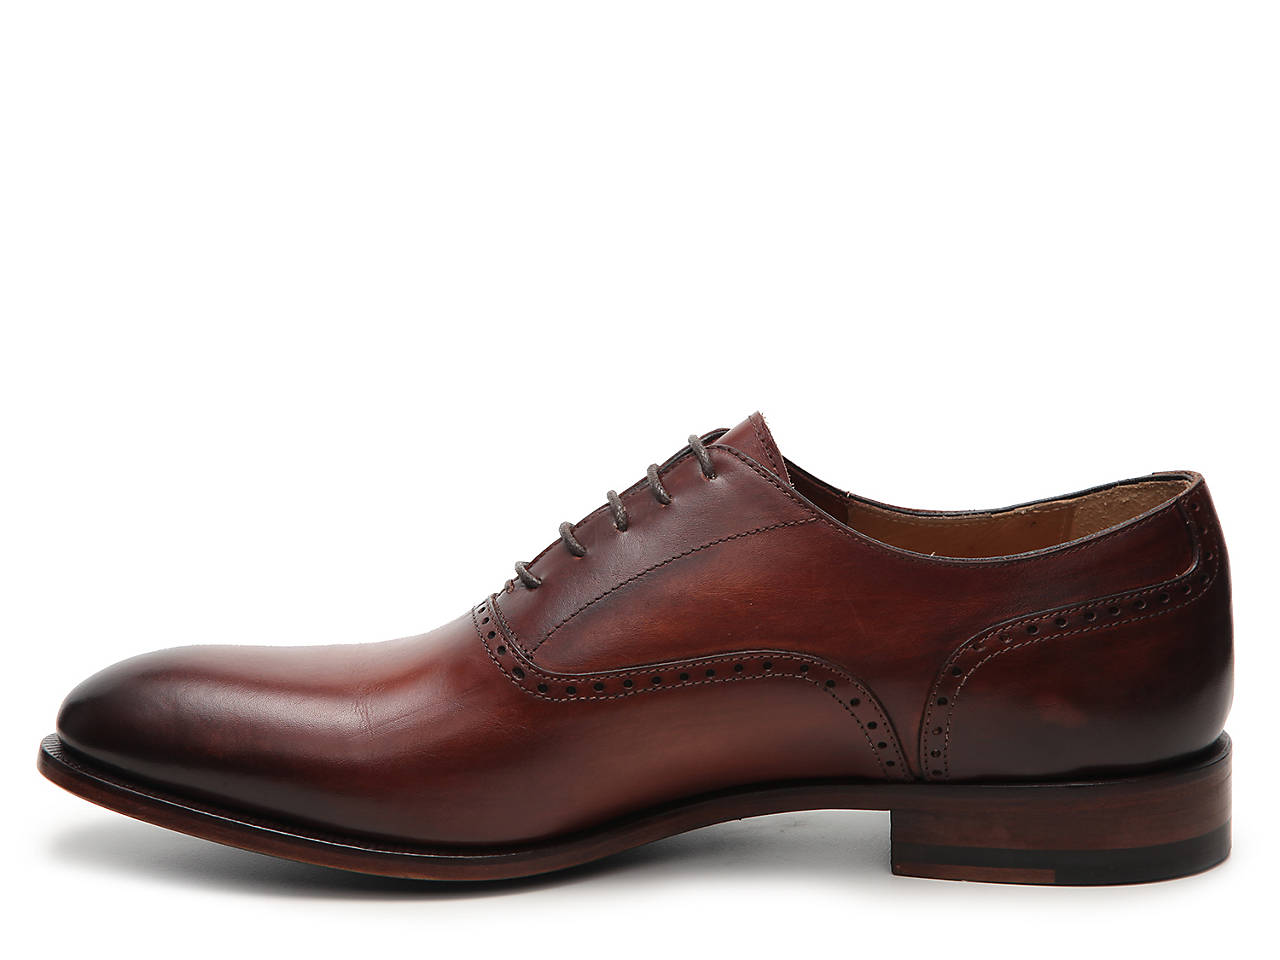 Blake McKay T3i Oxford Men's Shoes | DSW